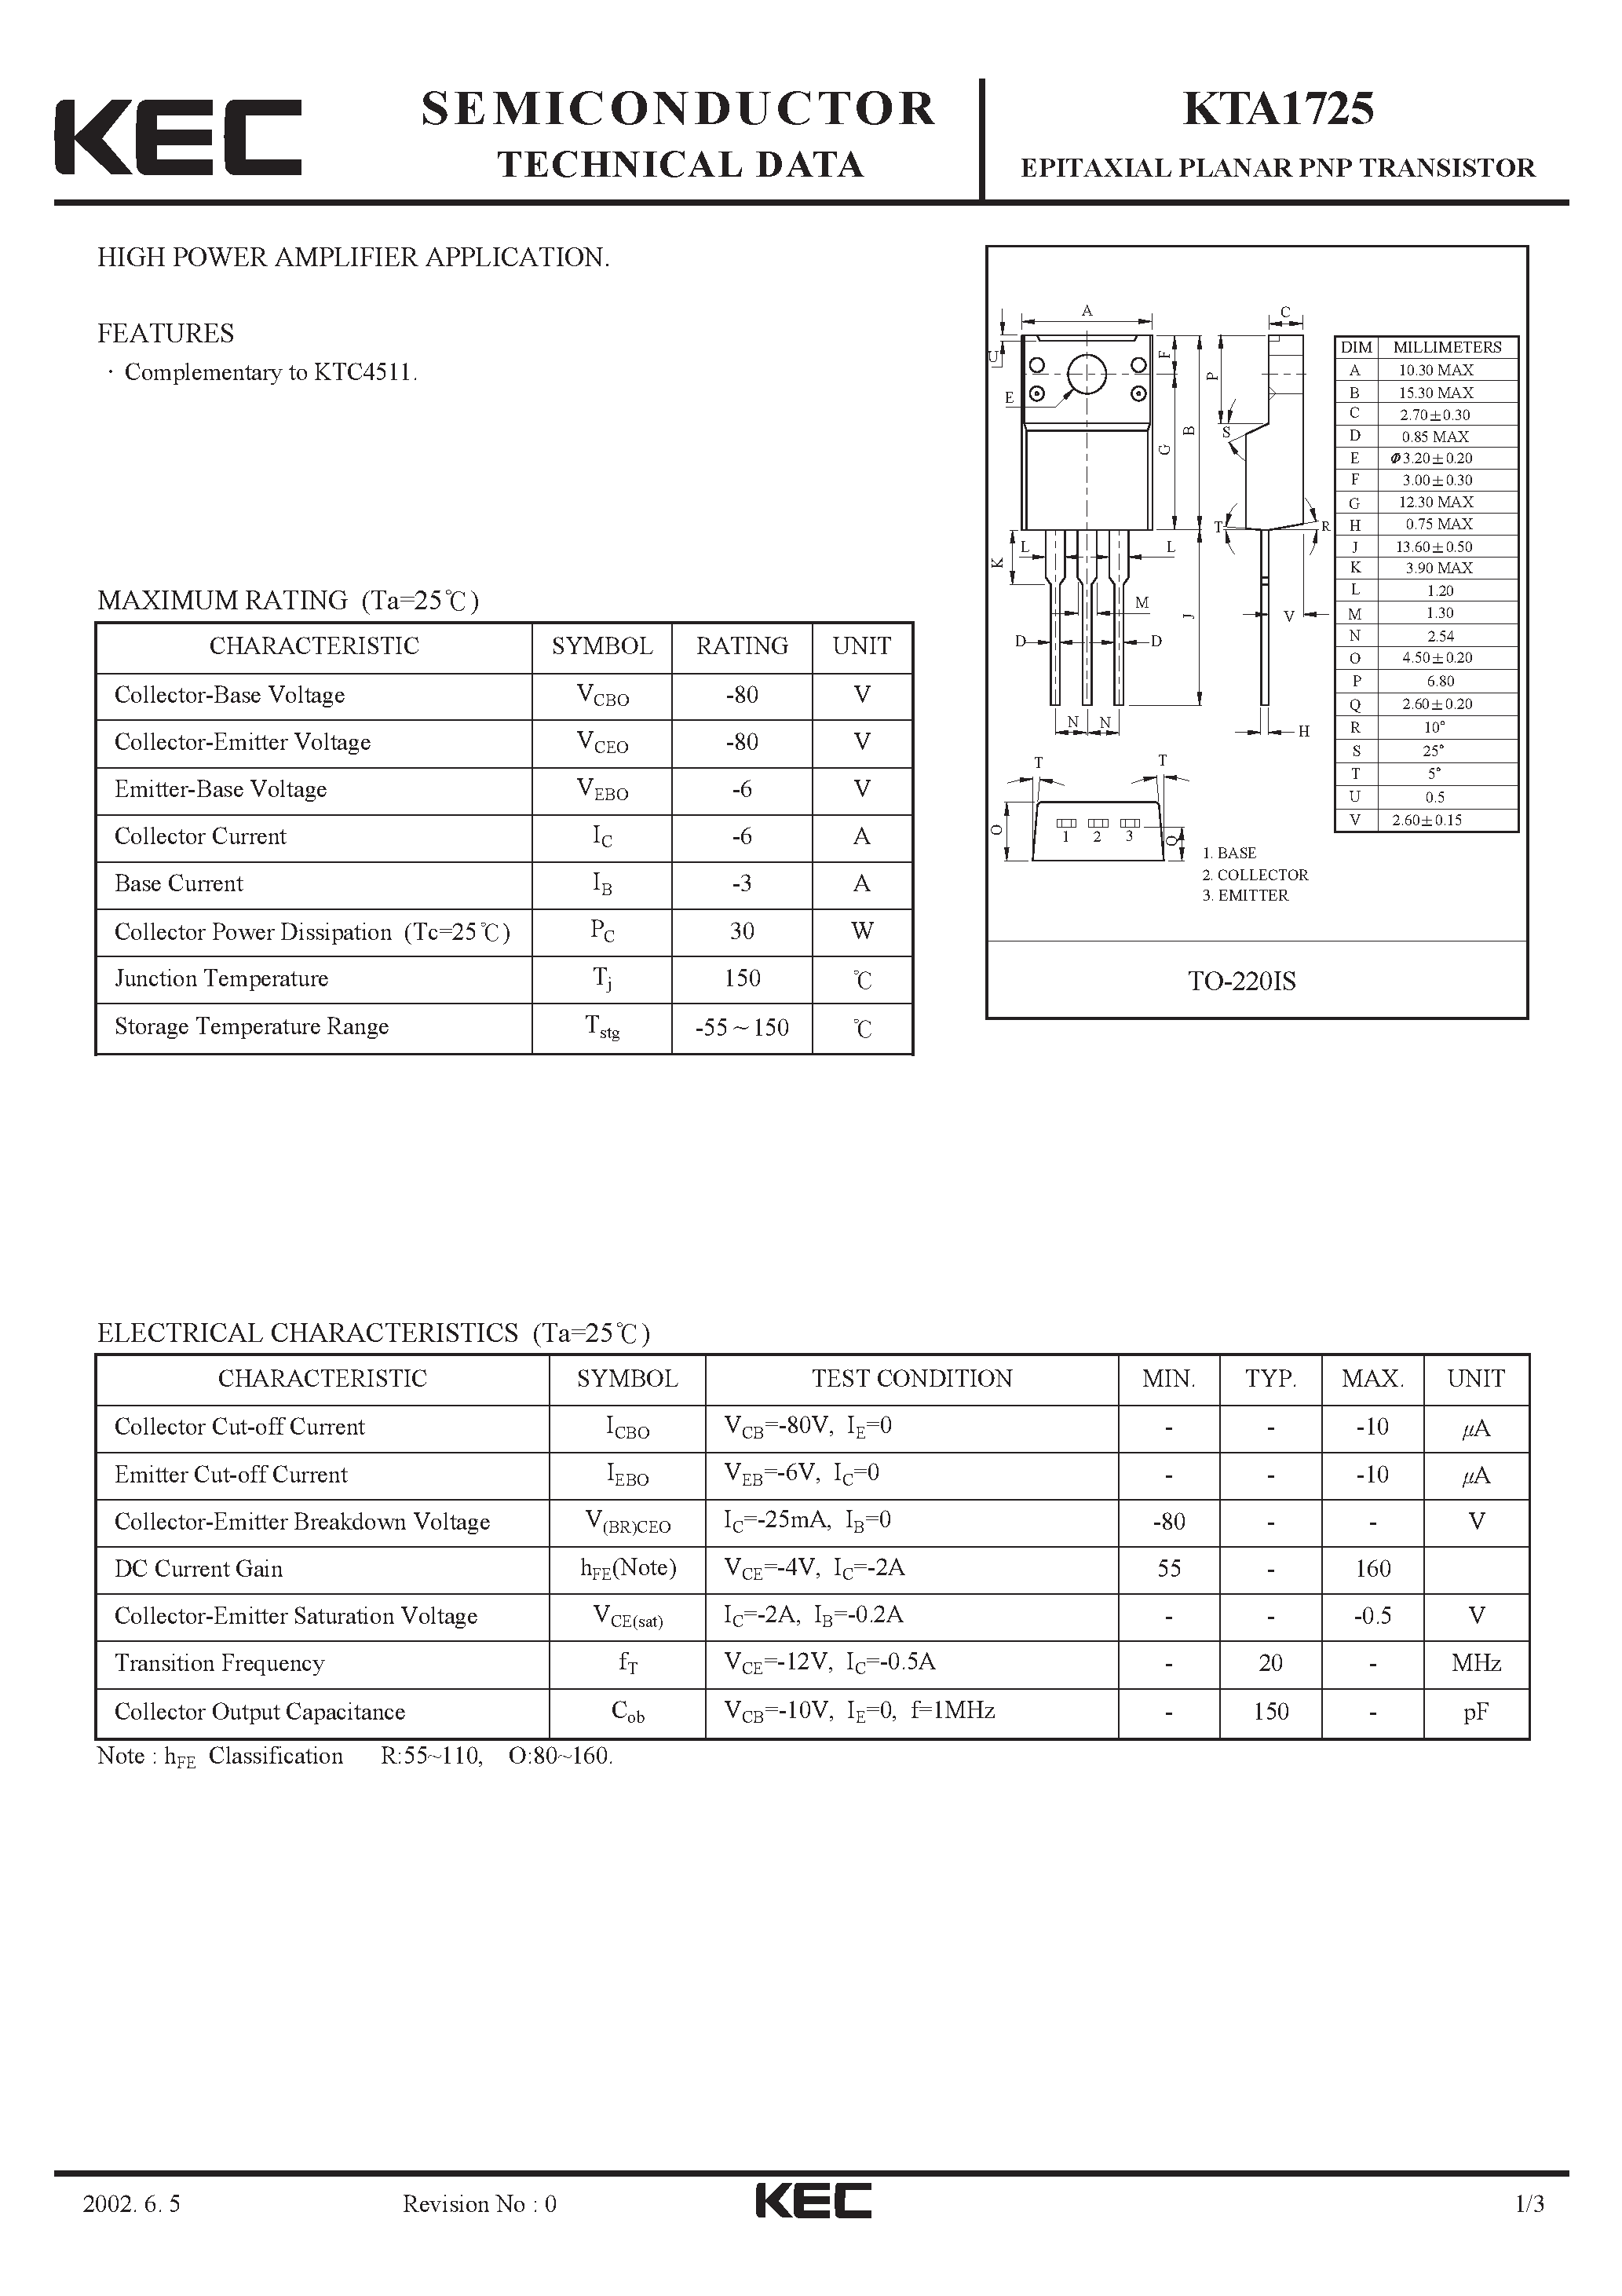 Datasheet KTA1725 - EPITAXIAL PLANAR PNP TRANSISTOR (HIGH POWER AMPLIFIER) page 1